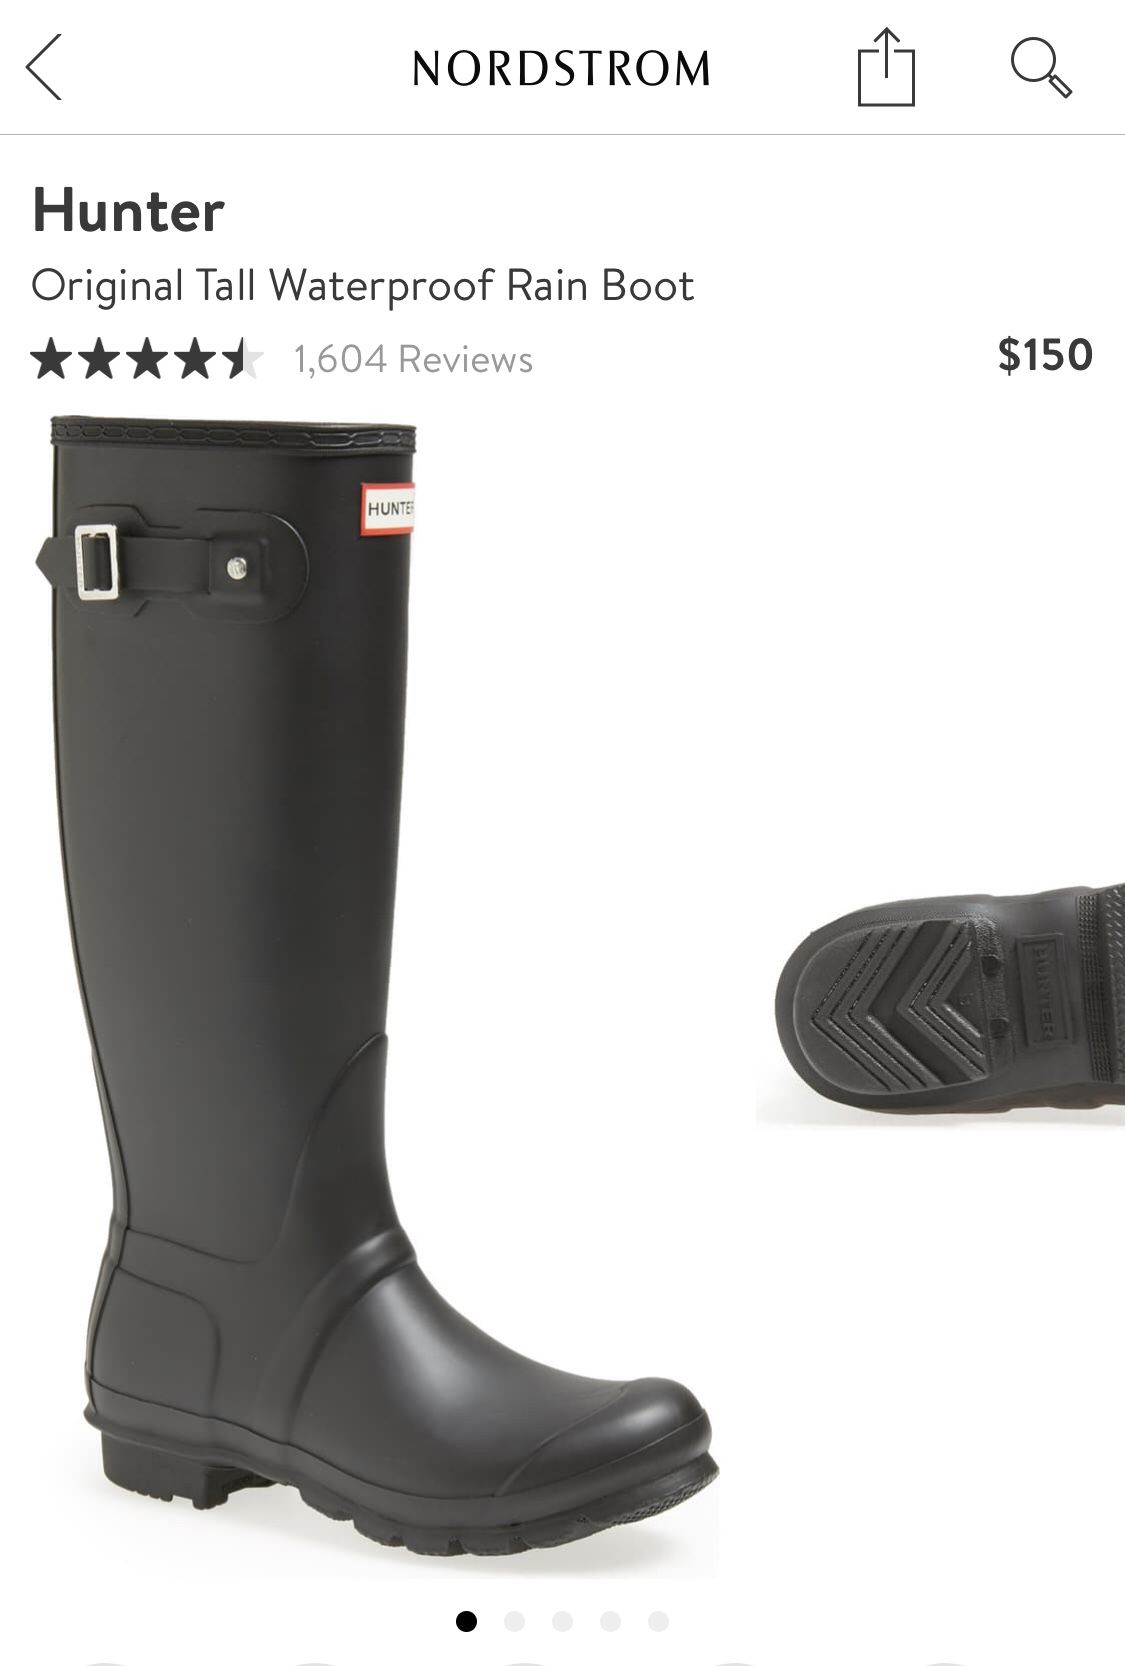 Hunter Original Tall Waterproof Rain Boots size 8